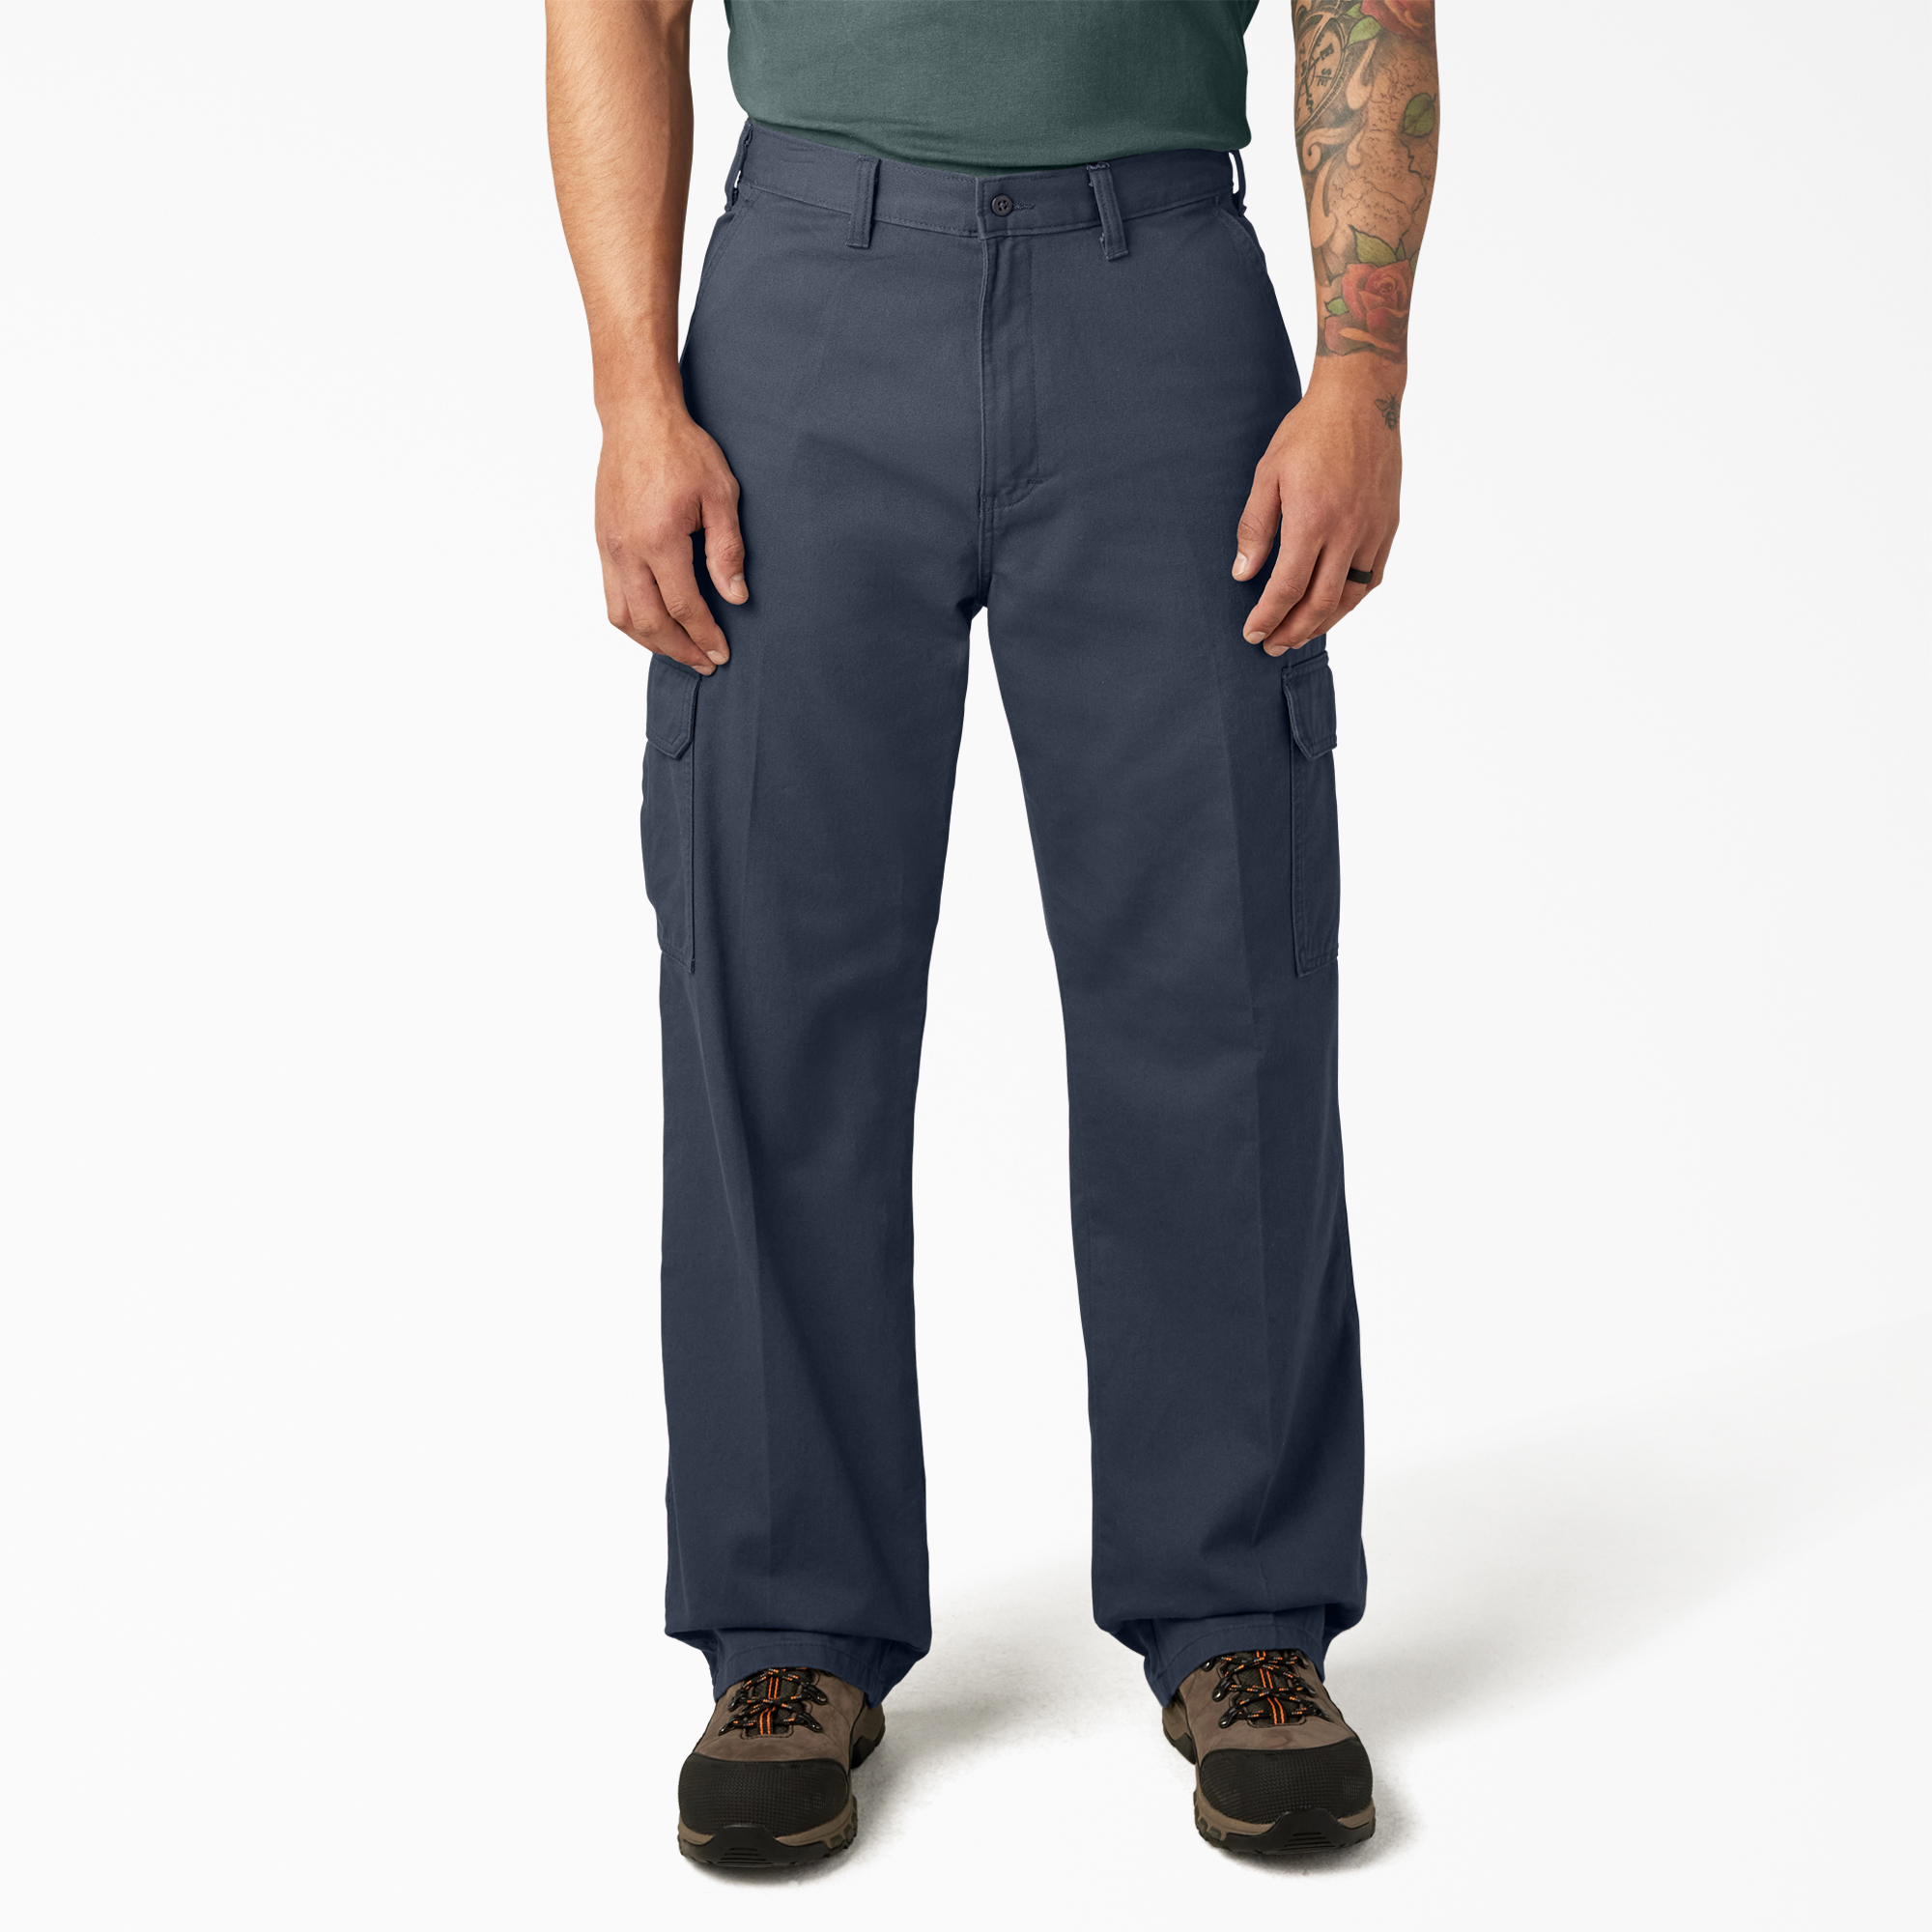 navy blue work cargo pants